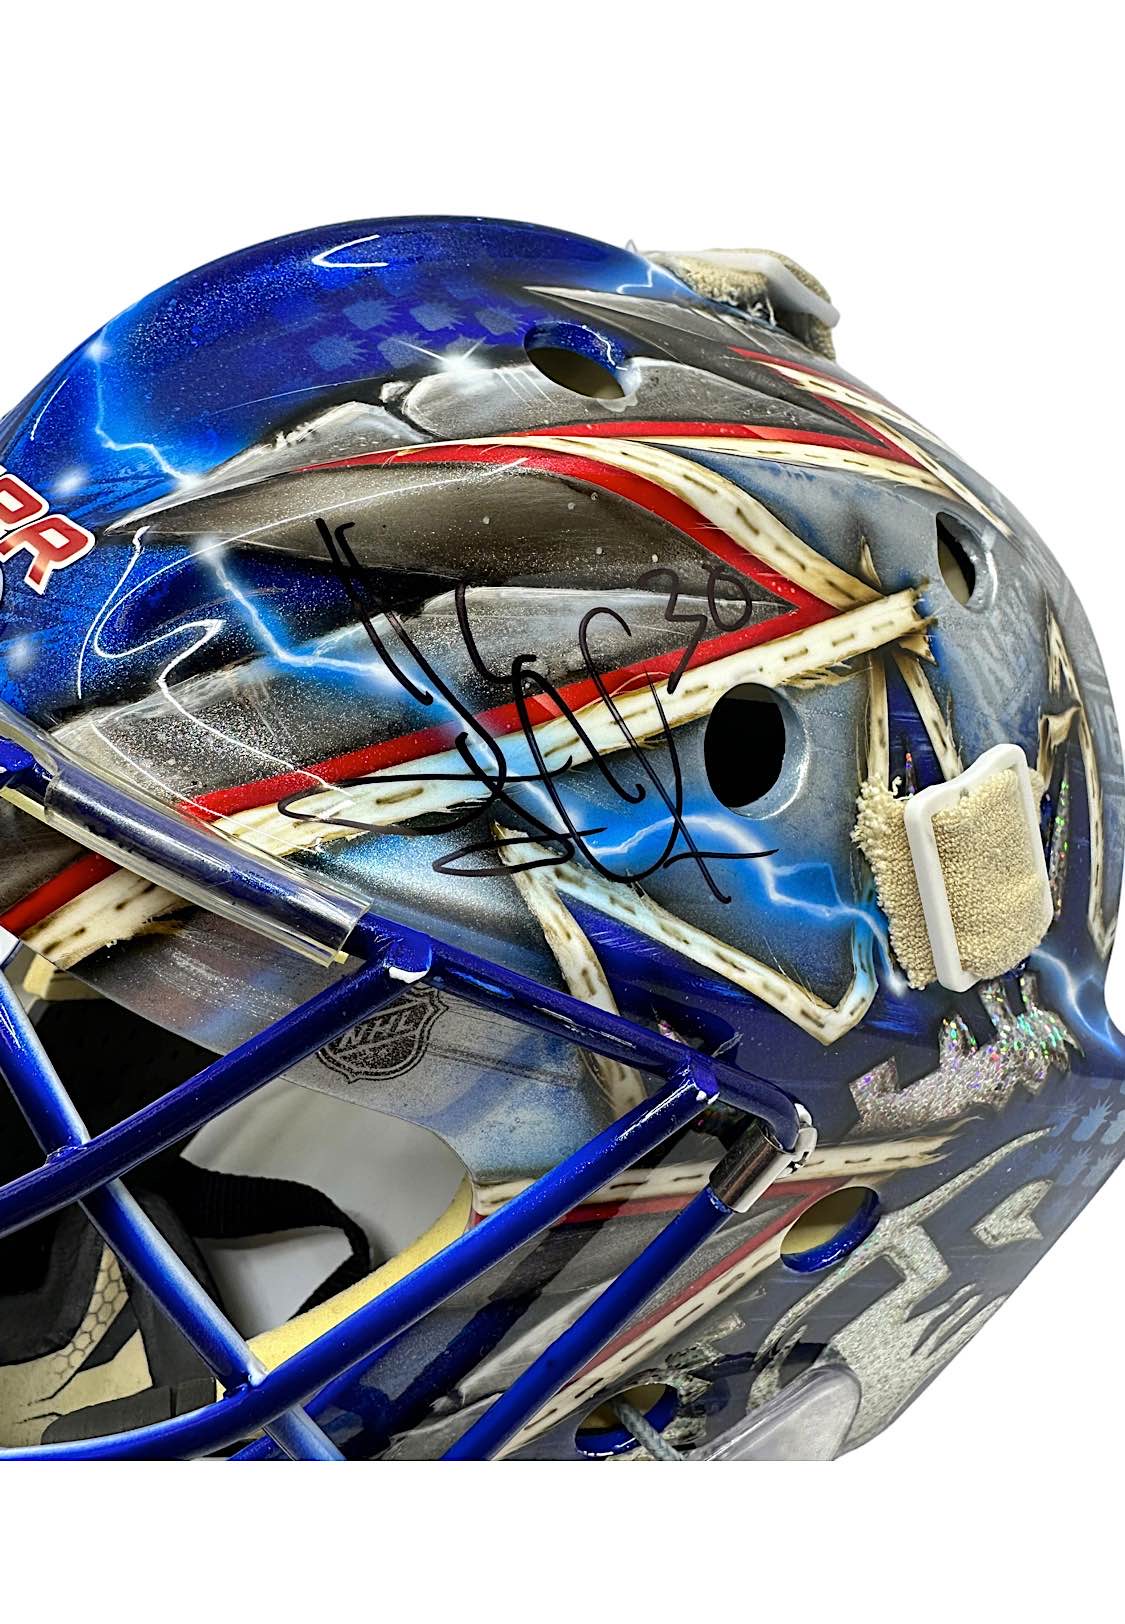 Henrik Lundqvist Goalie Mask Unsigned 2012 Winter Classic New York